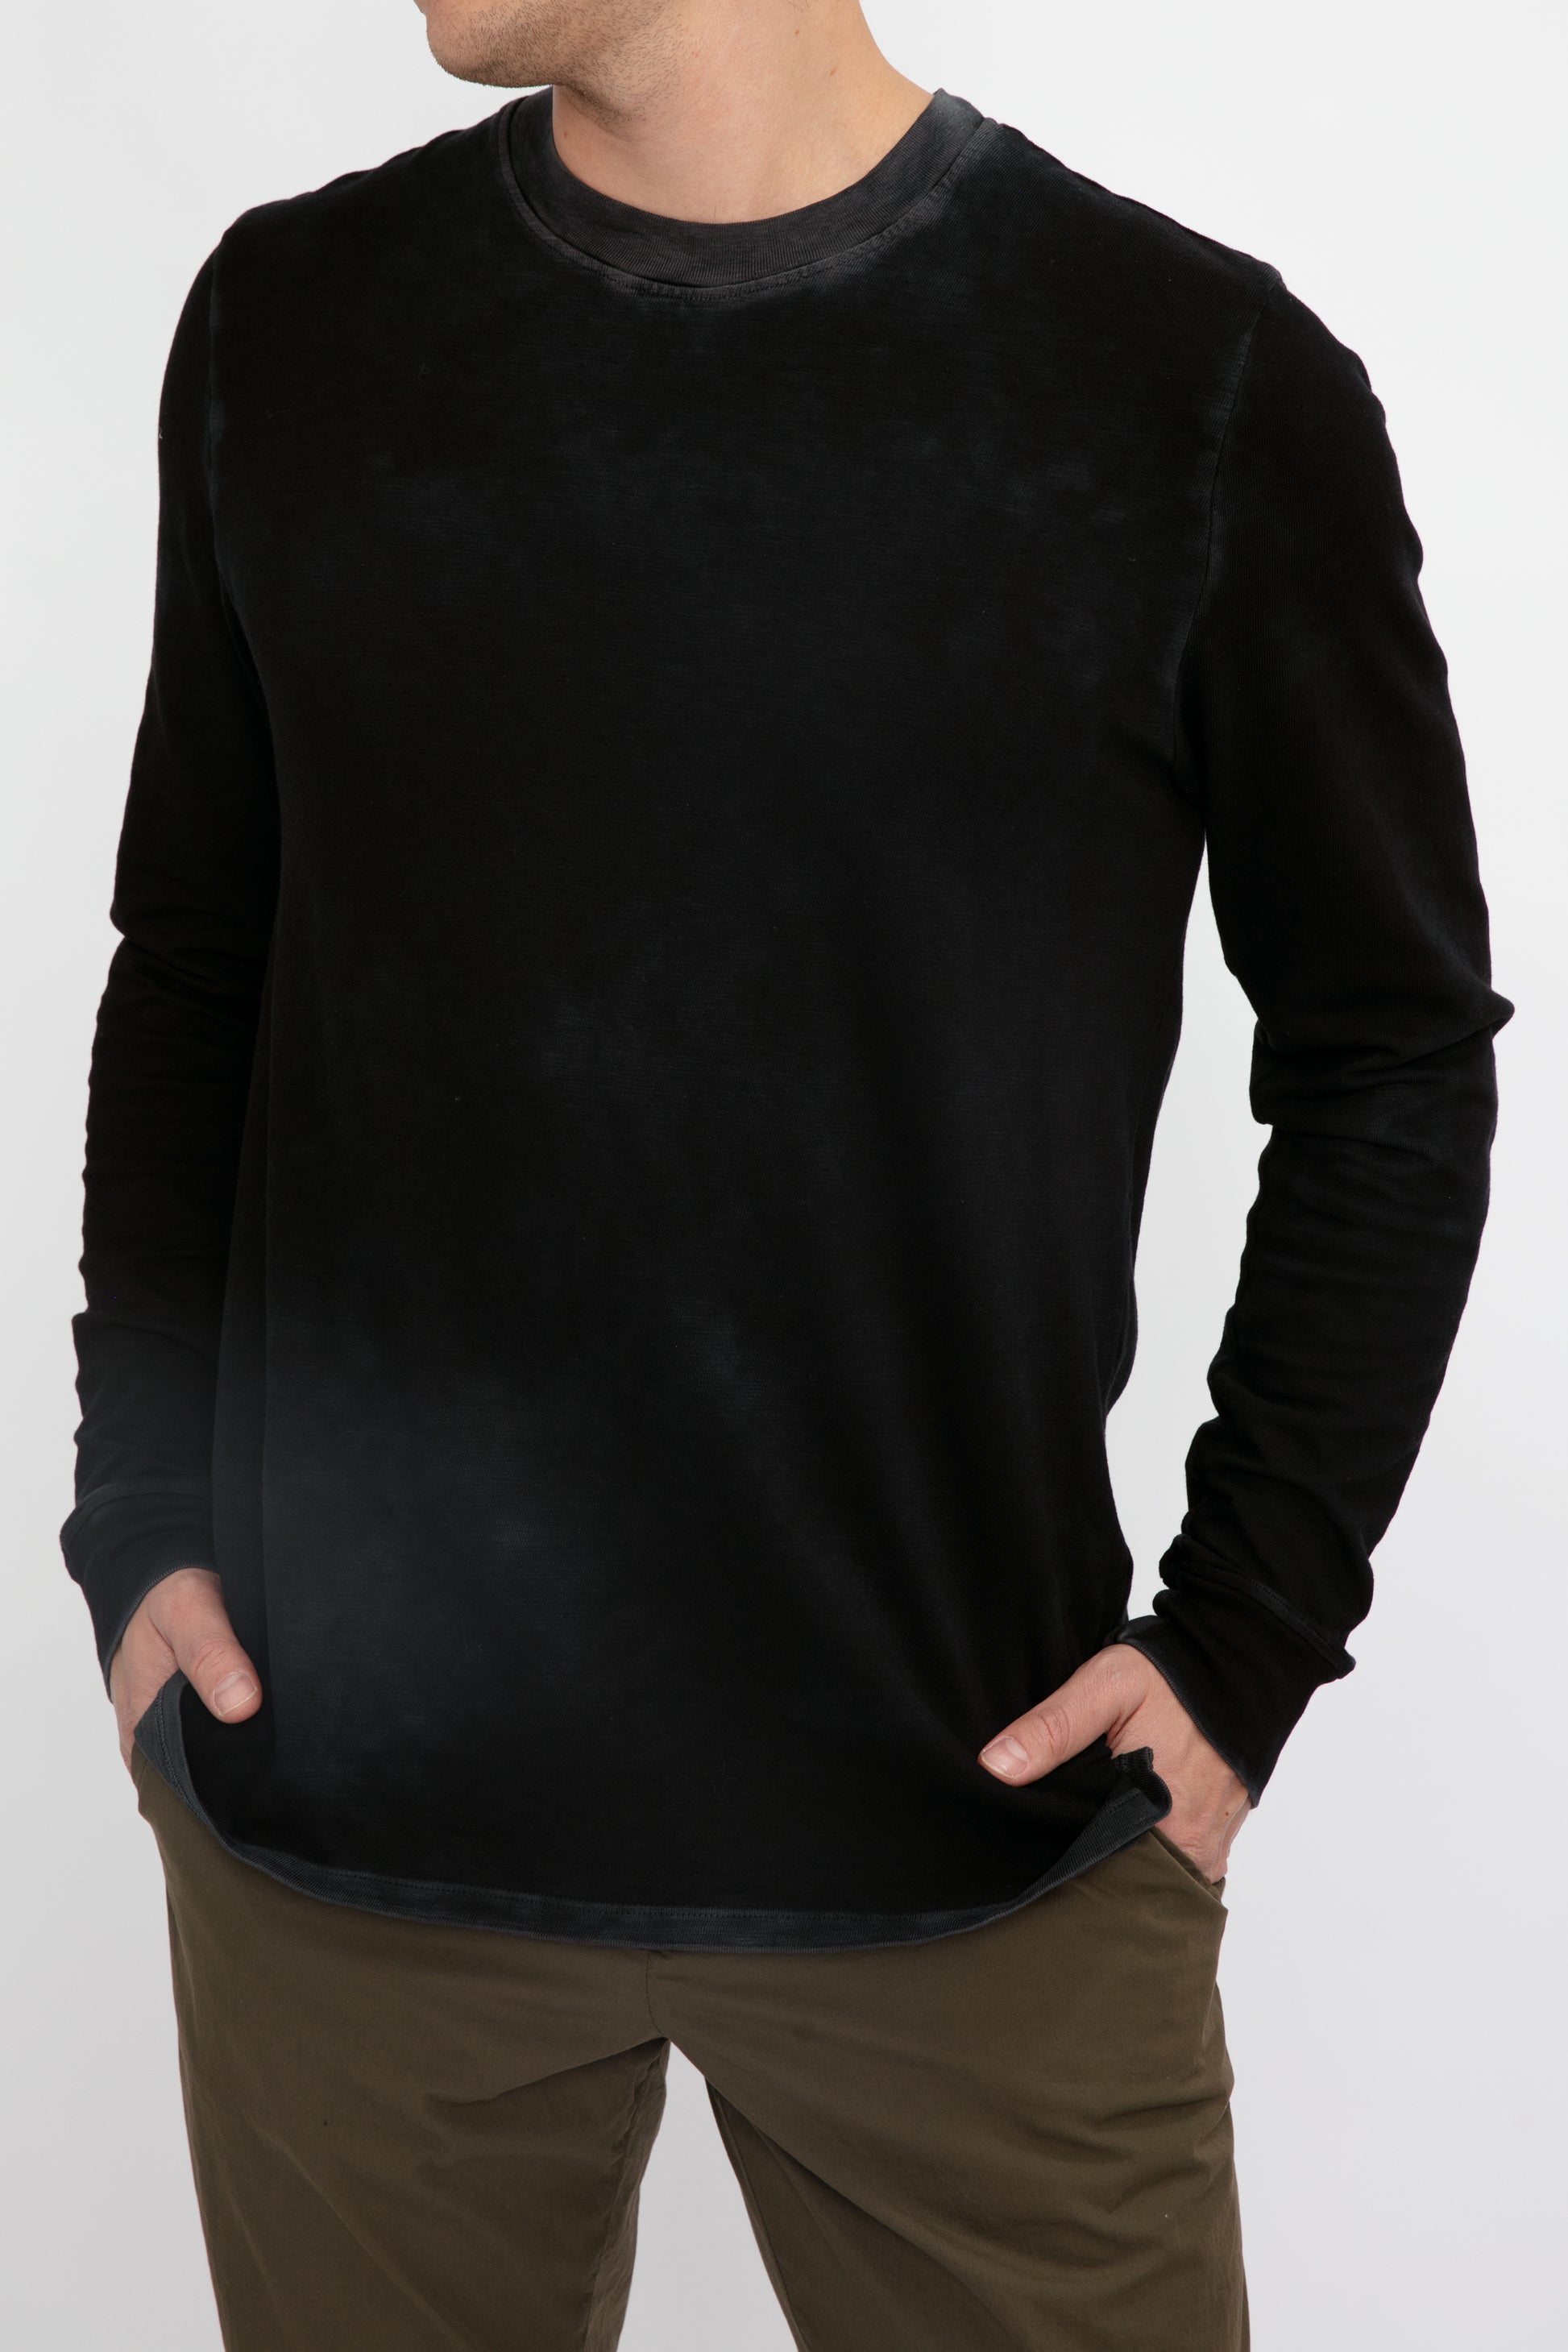 COTTON CITIZEN Presley Long Sleeve T-Shirt in Vintage Black